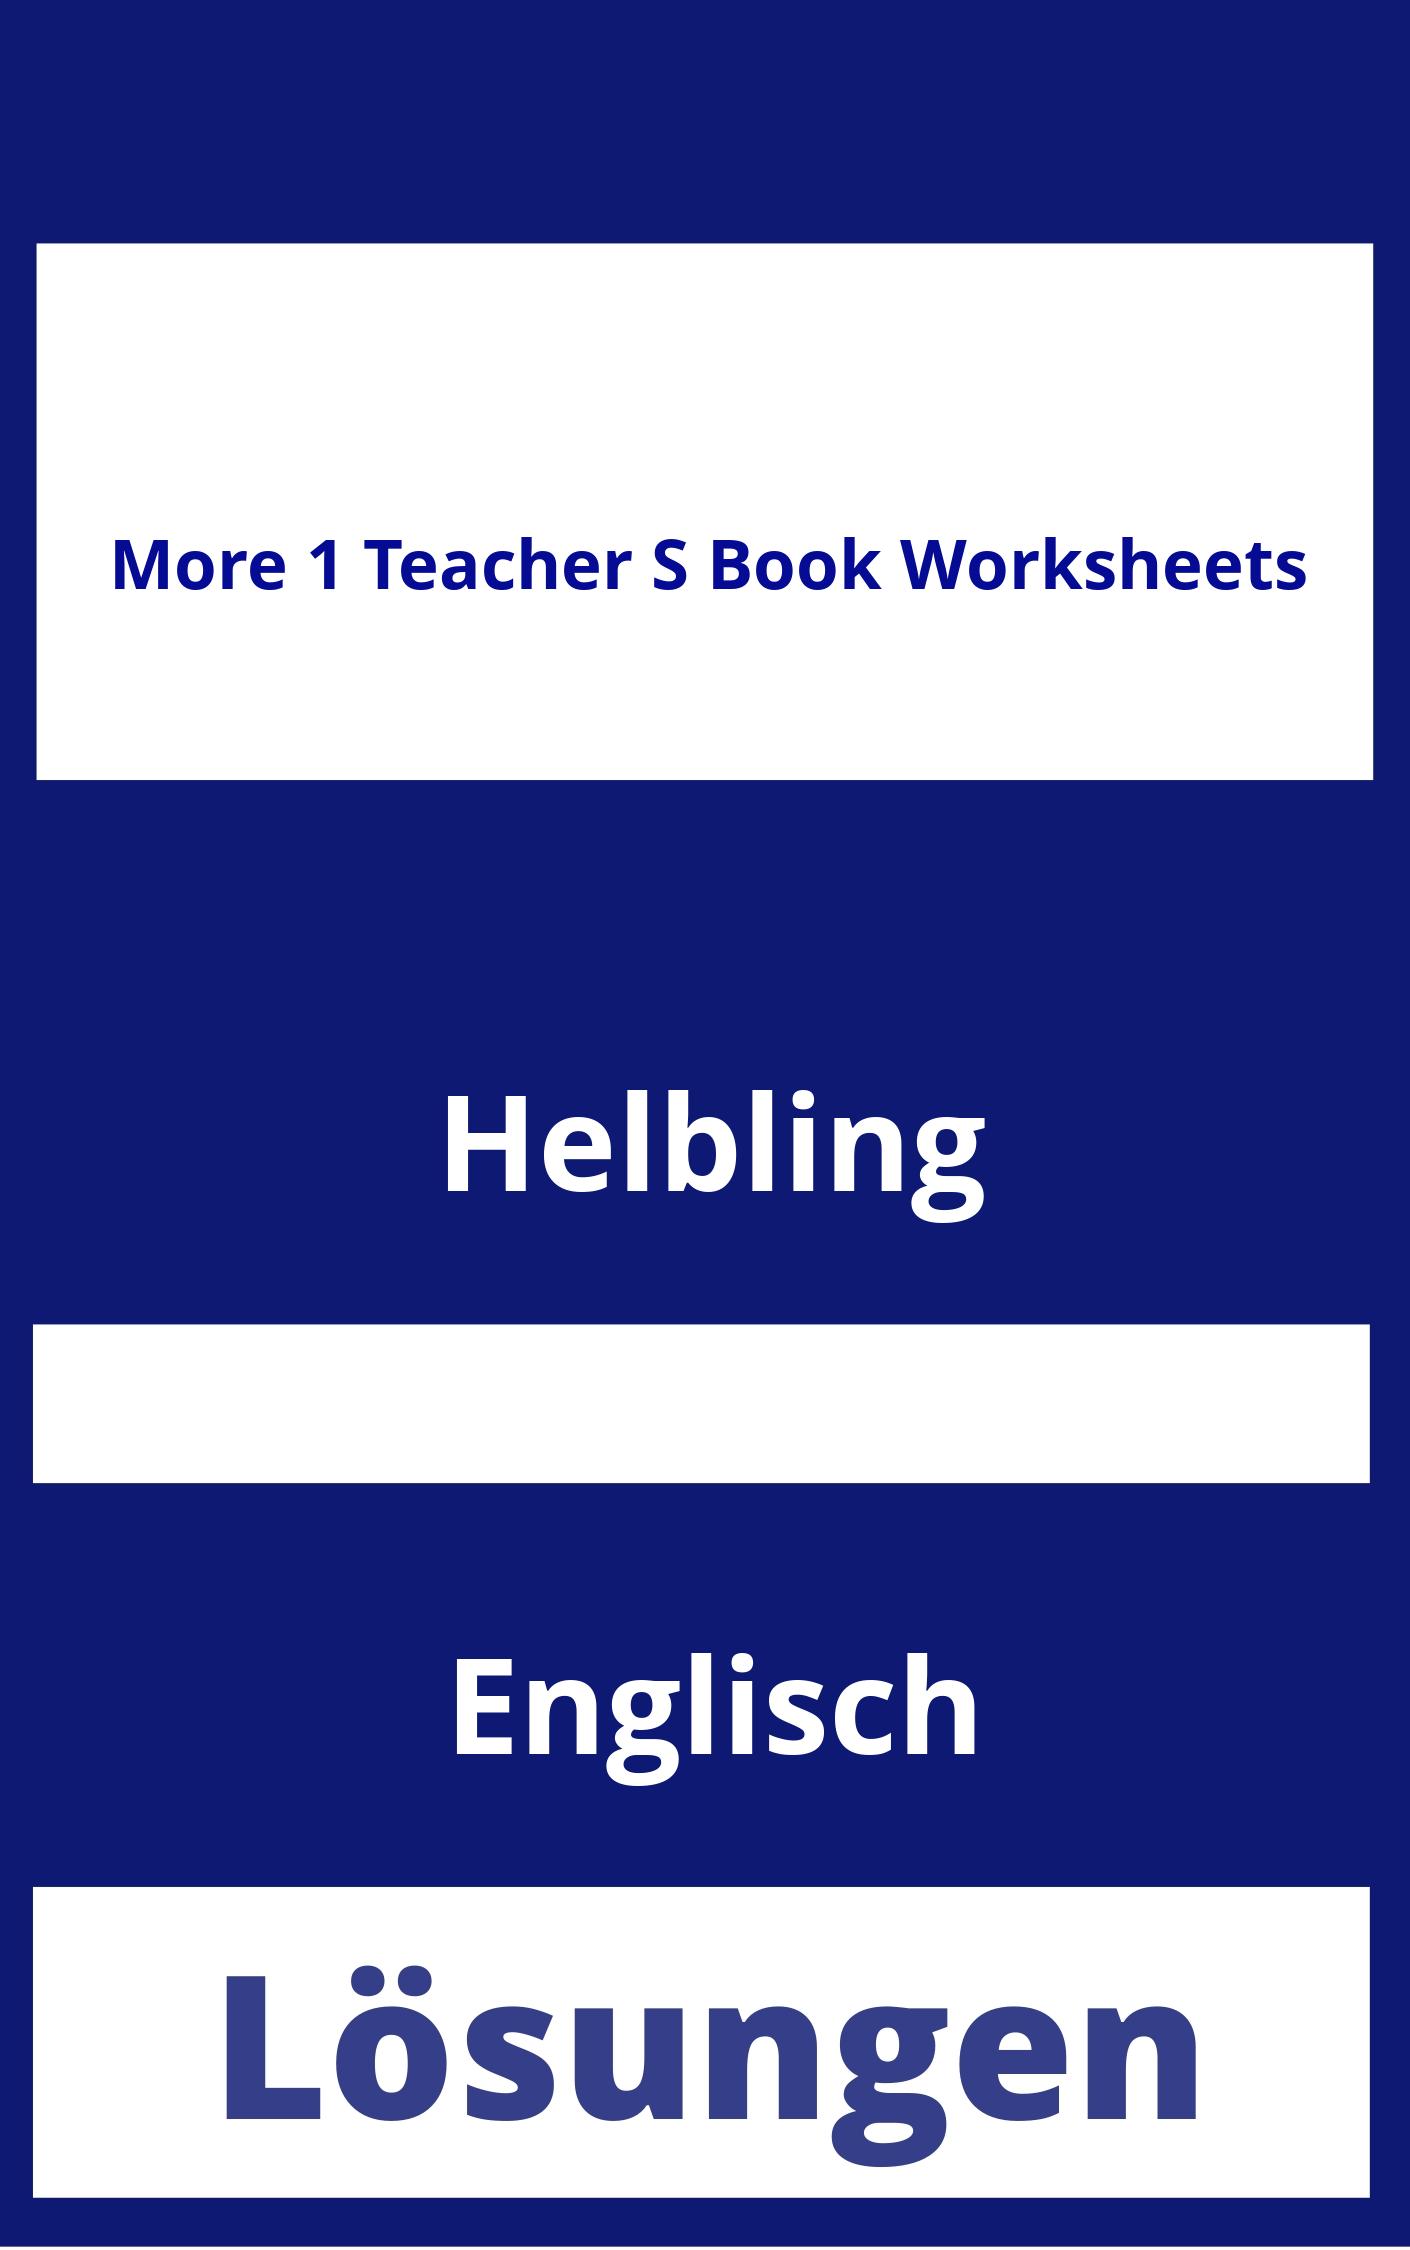 More 1 Teacher's book Worksheets Lösungen PDF